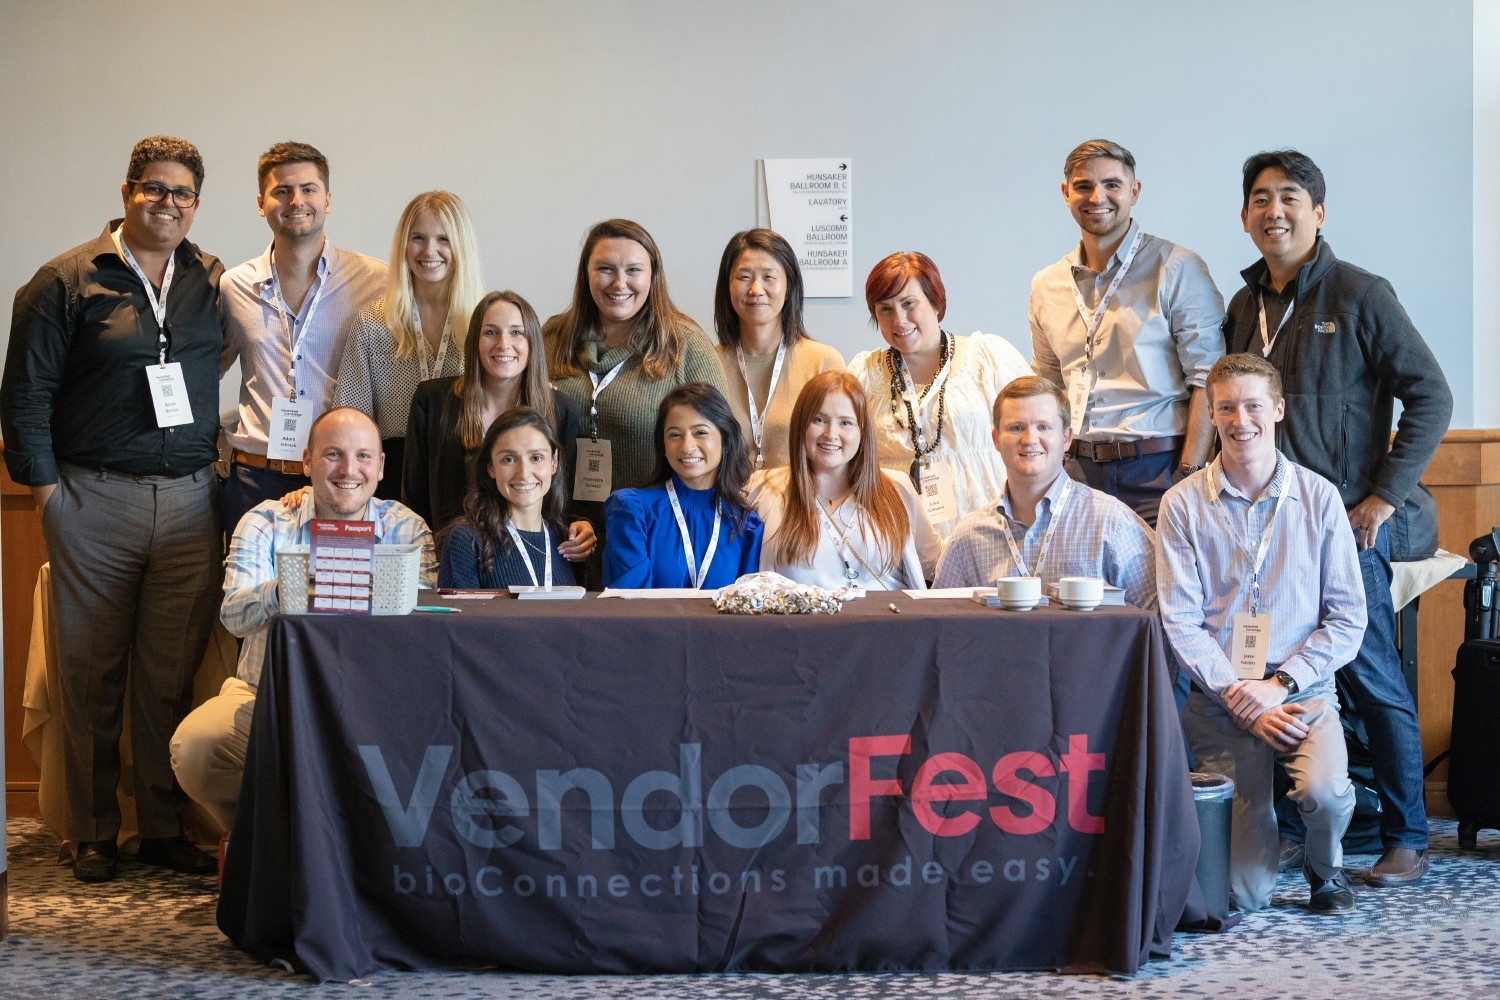 Sanguine Biosciences very own trade show - VendorFest - in Boston last Fall